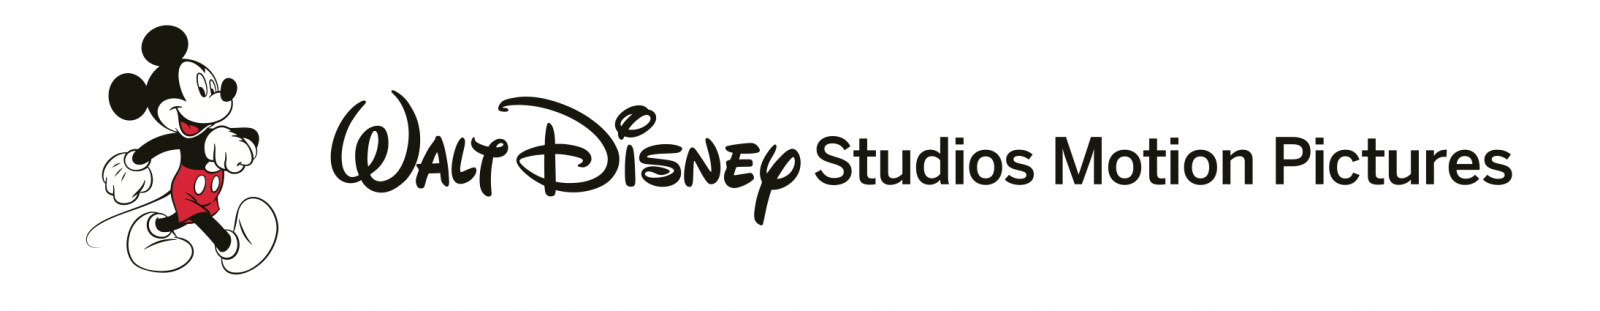 The Walt Disney Studios Movies Logo